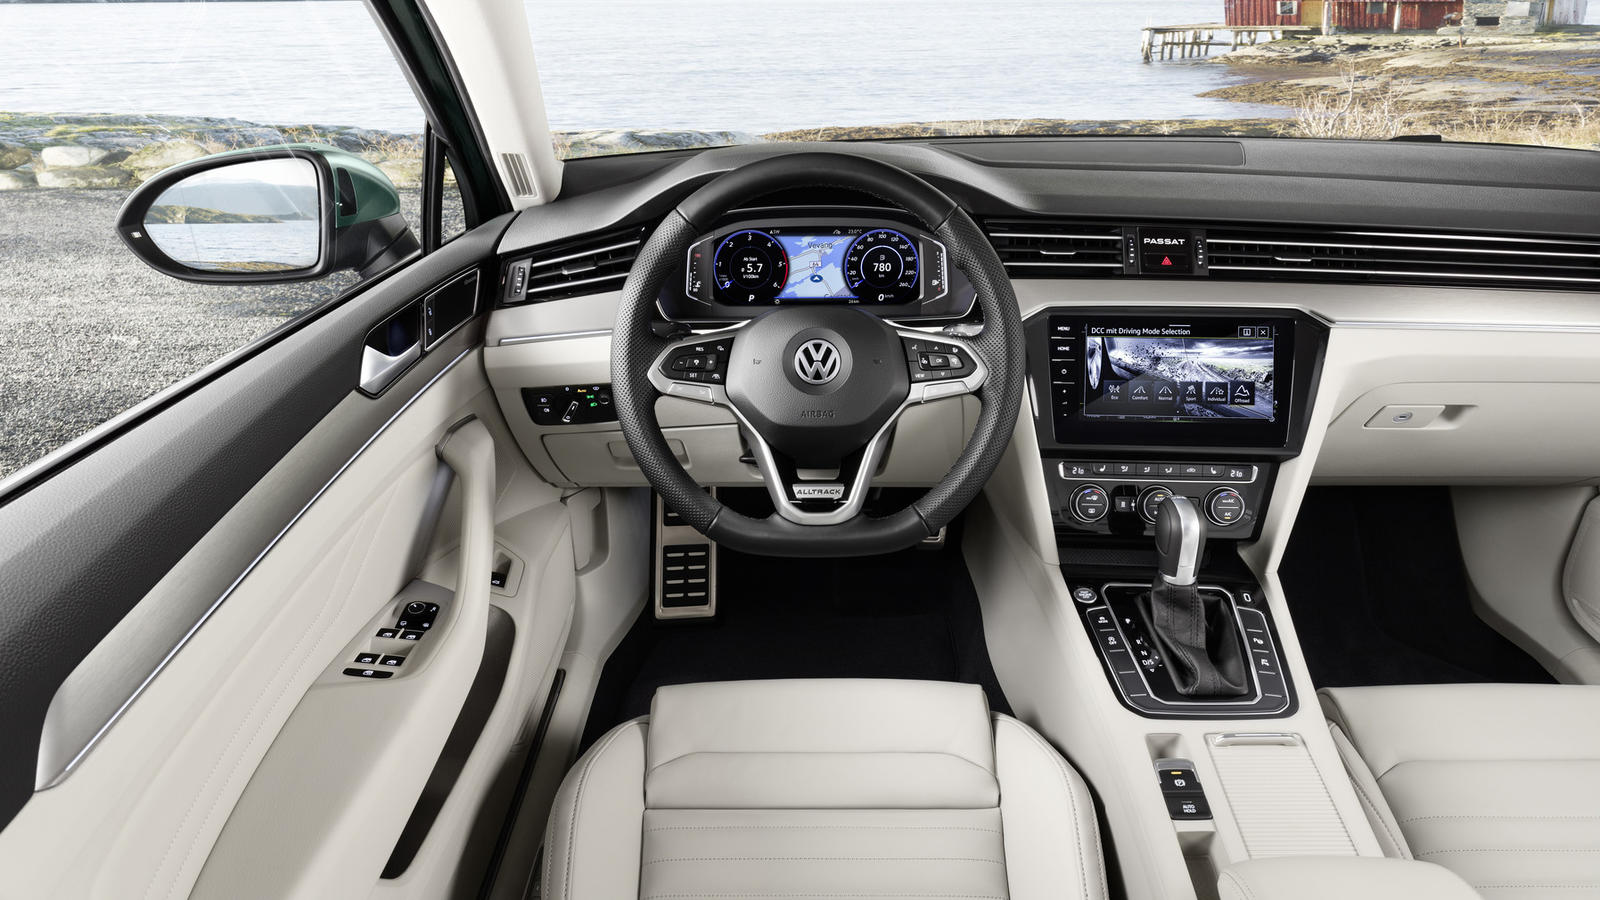 The new Volkswagen Passat Alltrack